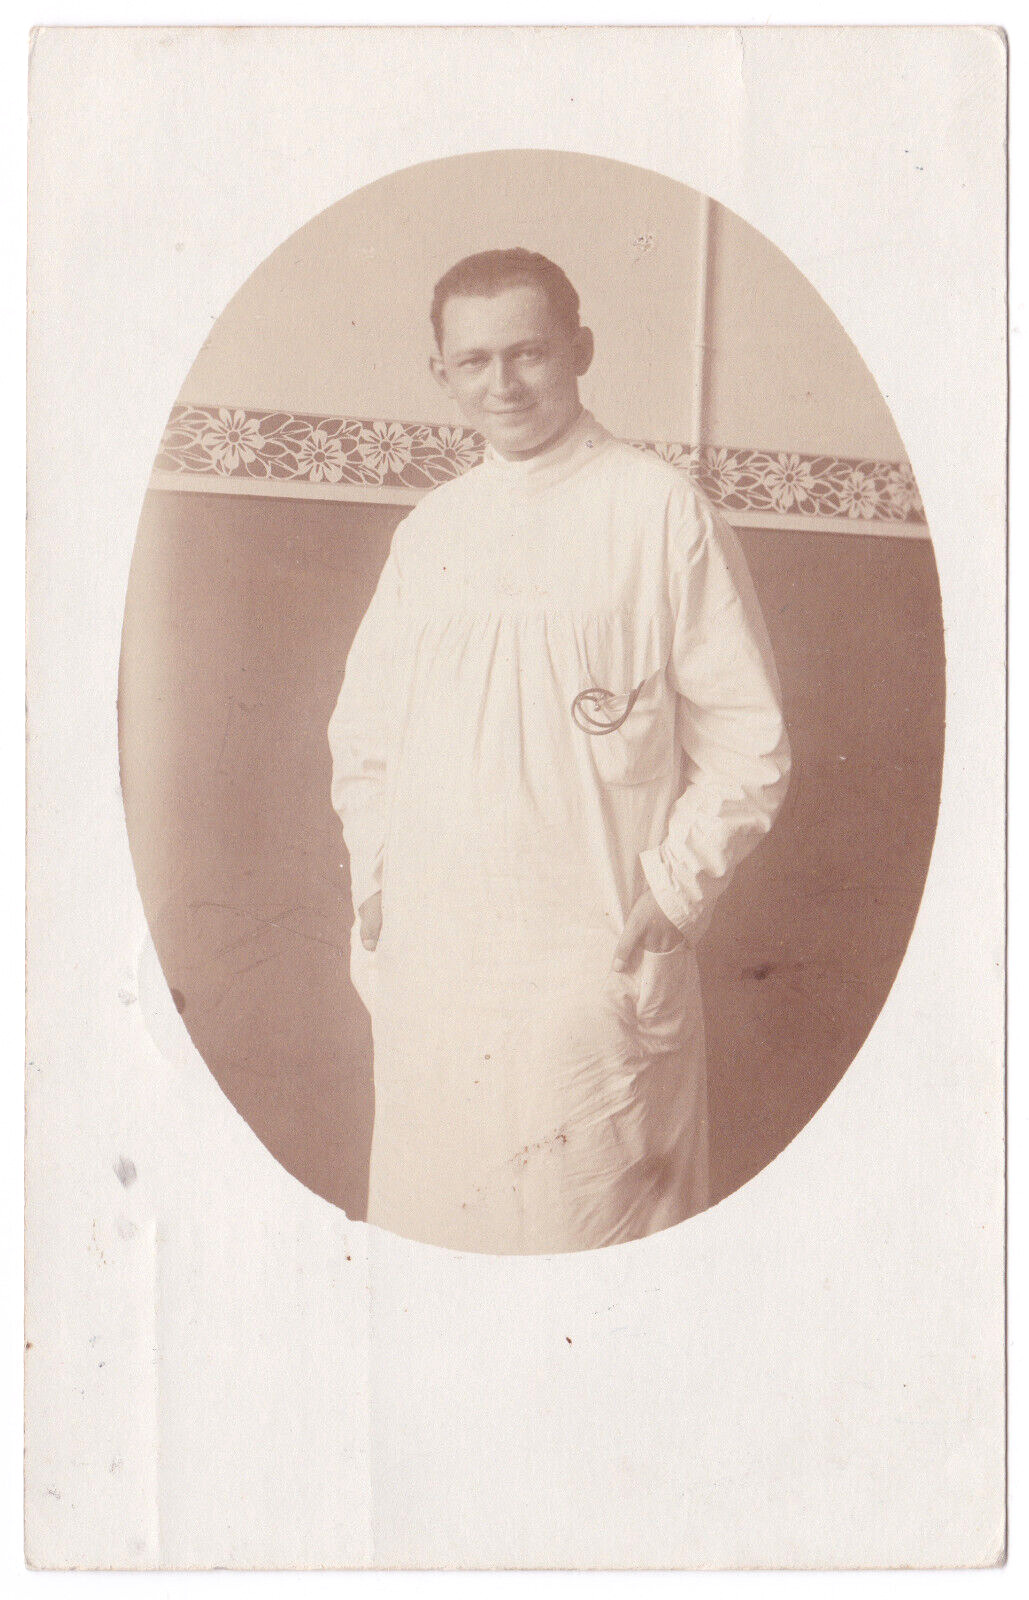 German Doctor Berlin Wilmersdorf Gown Stethoscope Oval Vignette c. 1927 RPPC